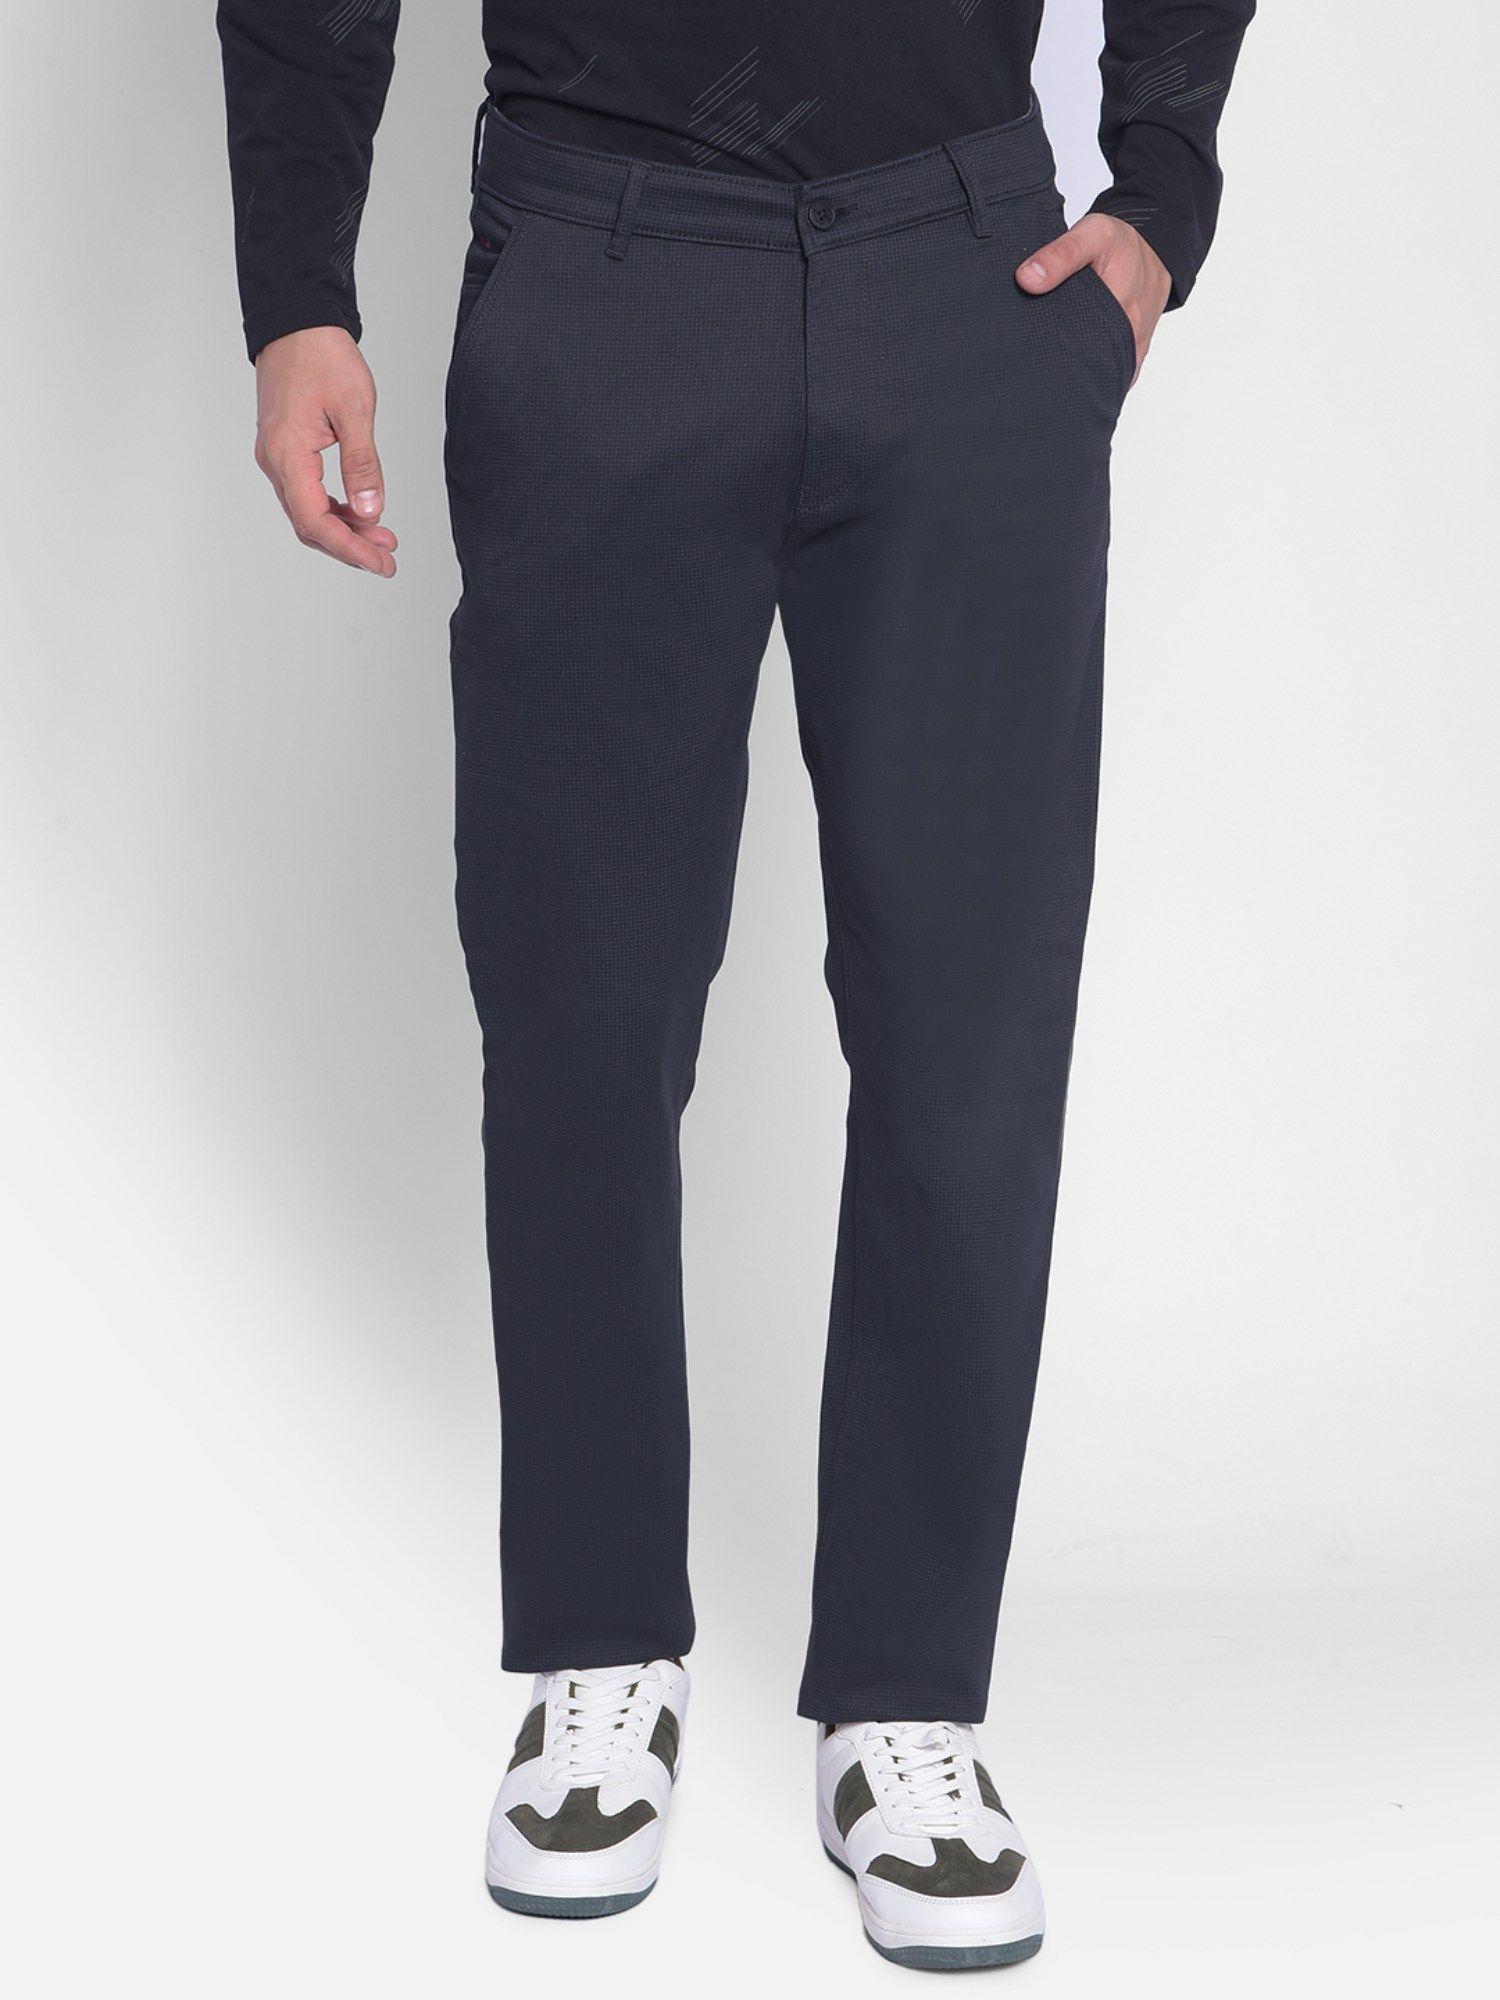 mens navy blue printed trouser